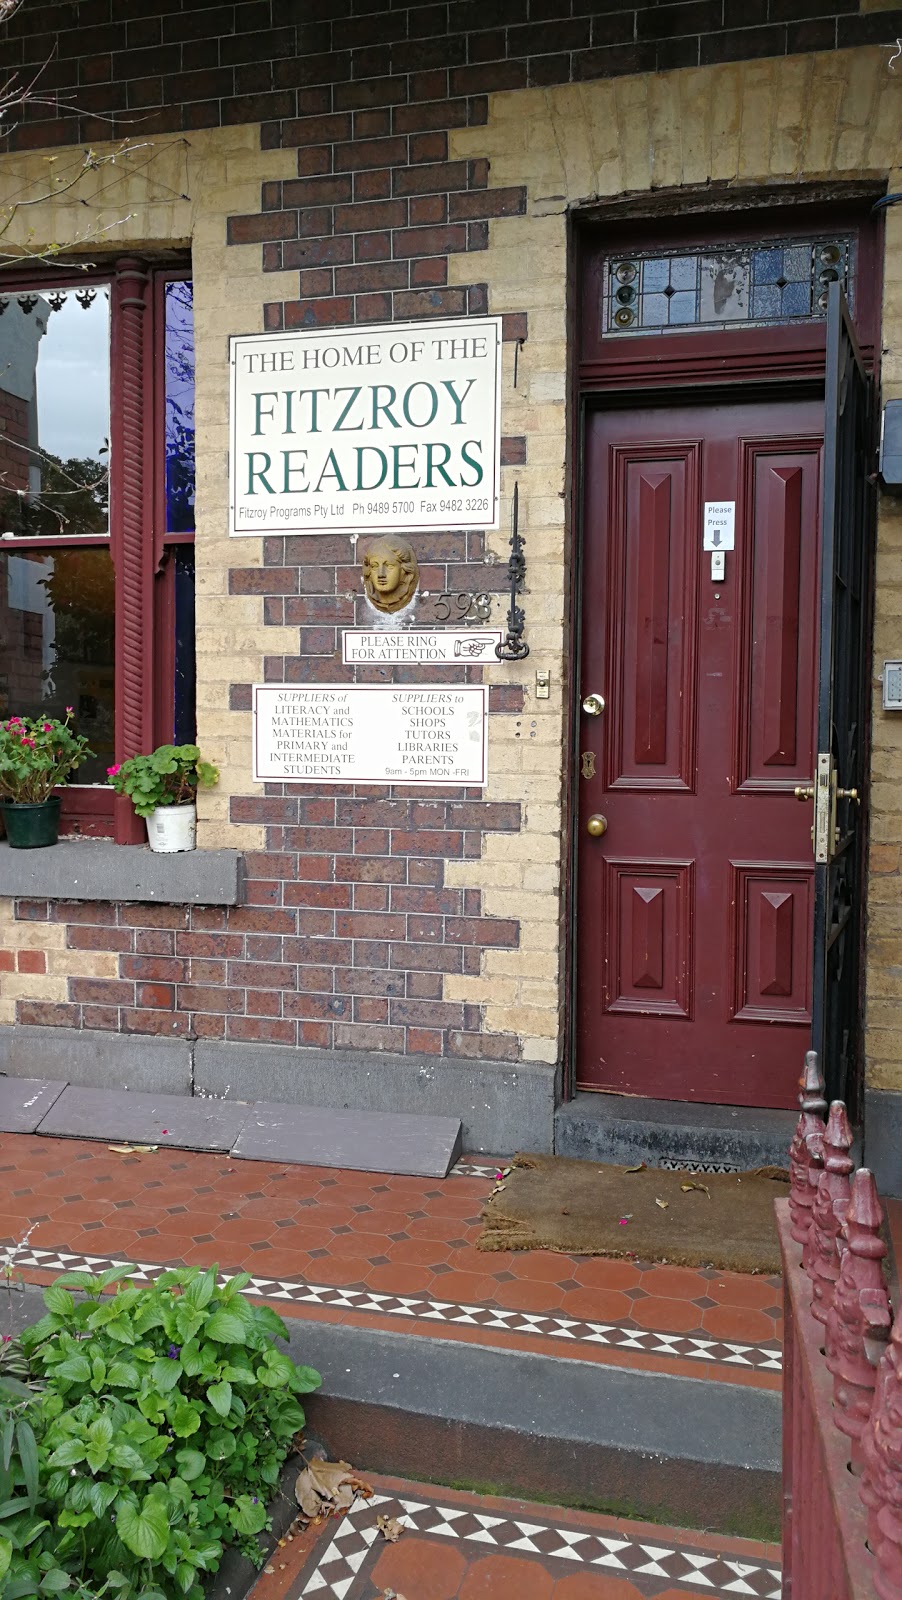 Fitzroy Programs Pty Ltd | 593 Brunswick St, Fitzroy North VIC 3068, Australia | Phone: (03) 9489 5700